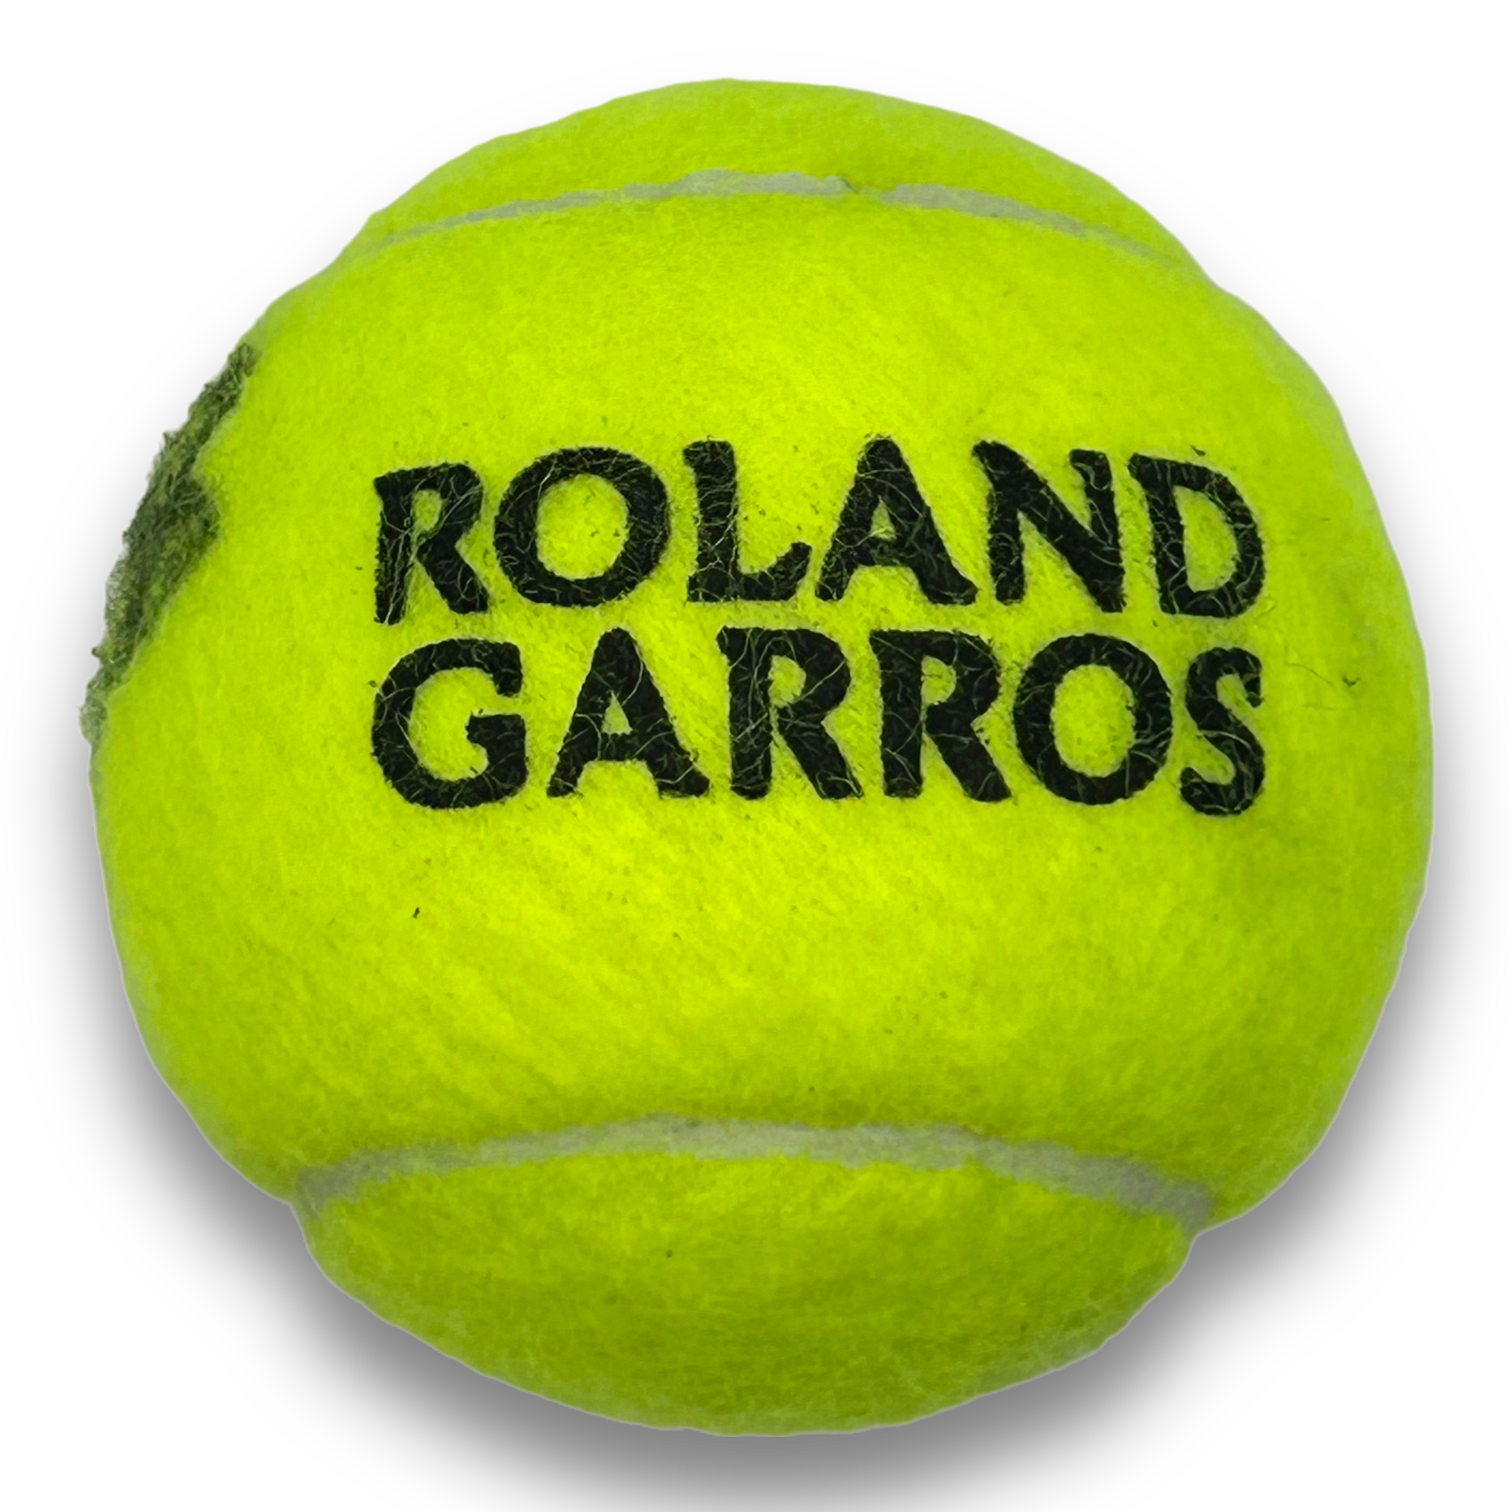 ONS JABEUR SIGNED WILSON 3 ROLAND GARROS TENNIS BALL (AFTAL COA) 2